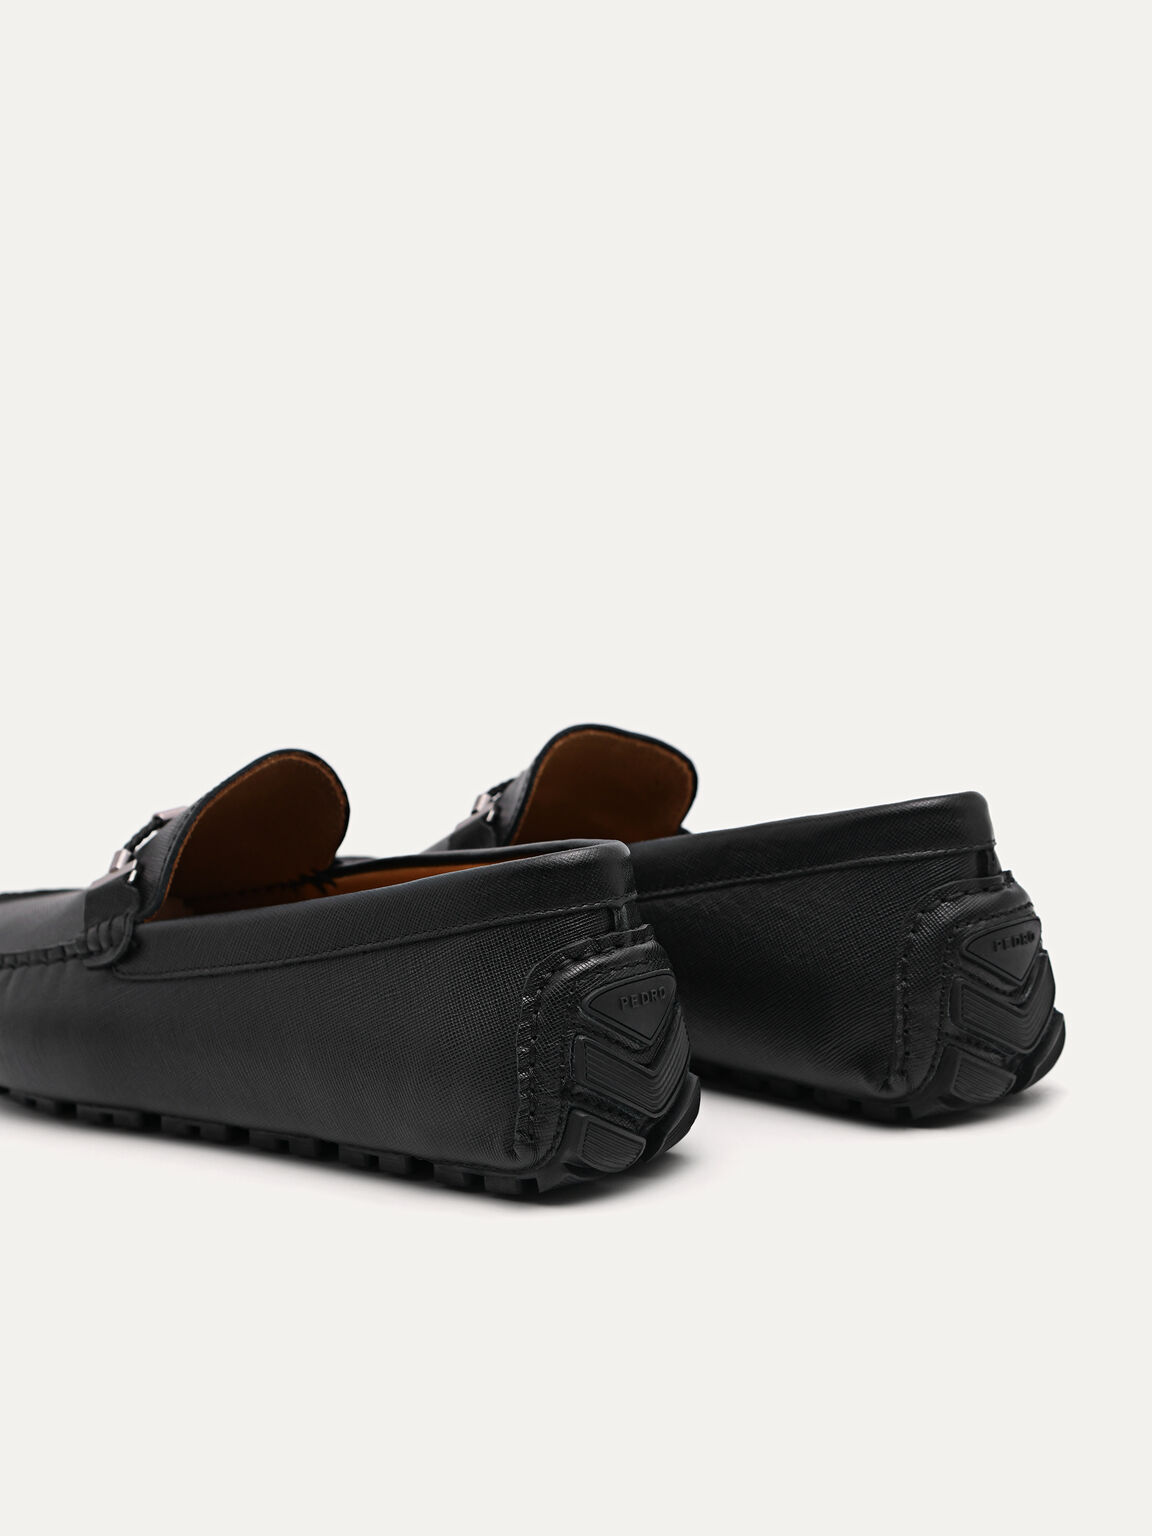 Robert Leather Driving Shoes, Black, hi-res